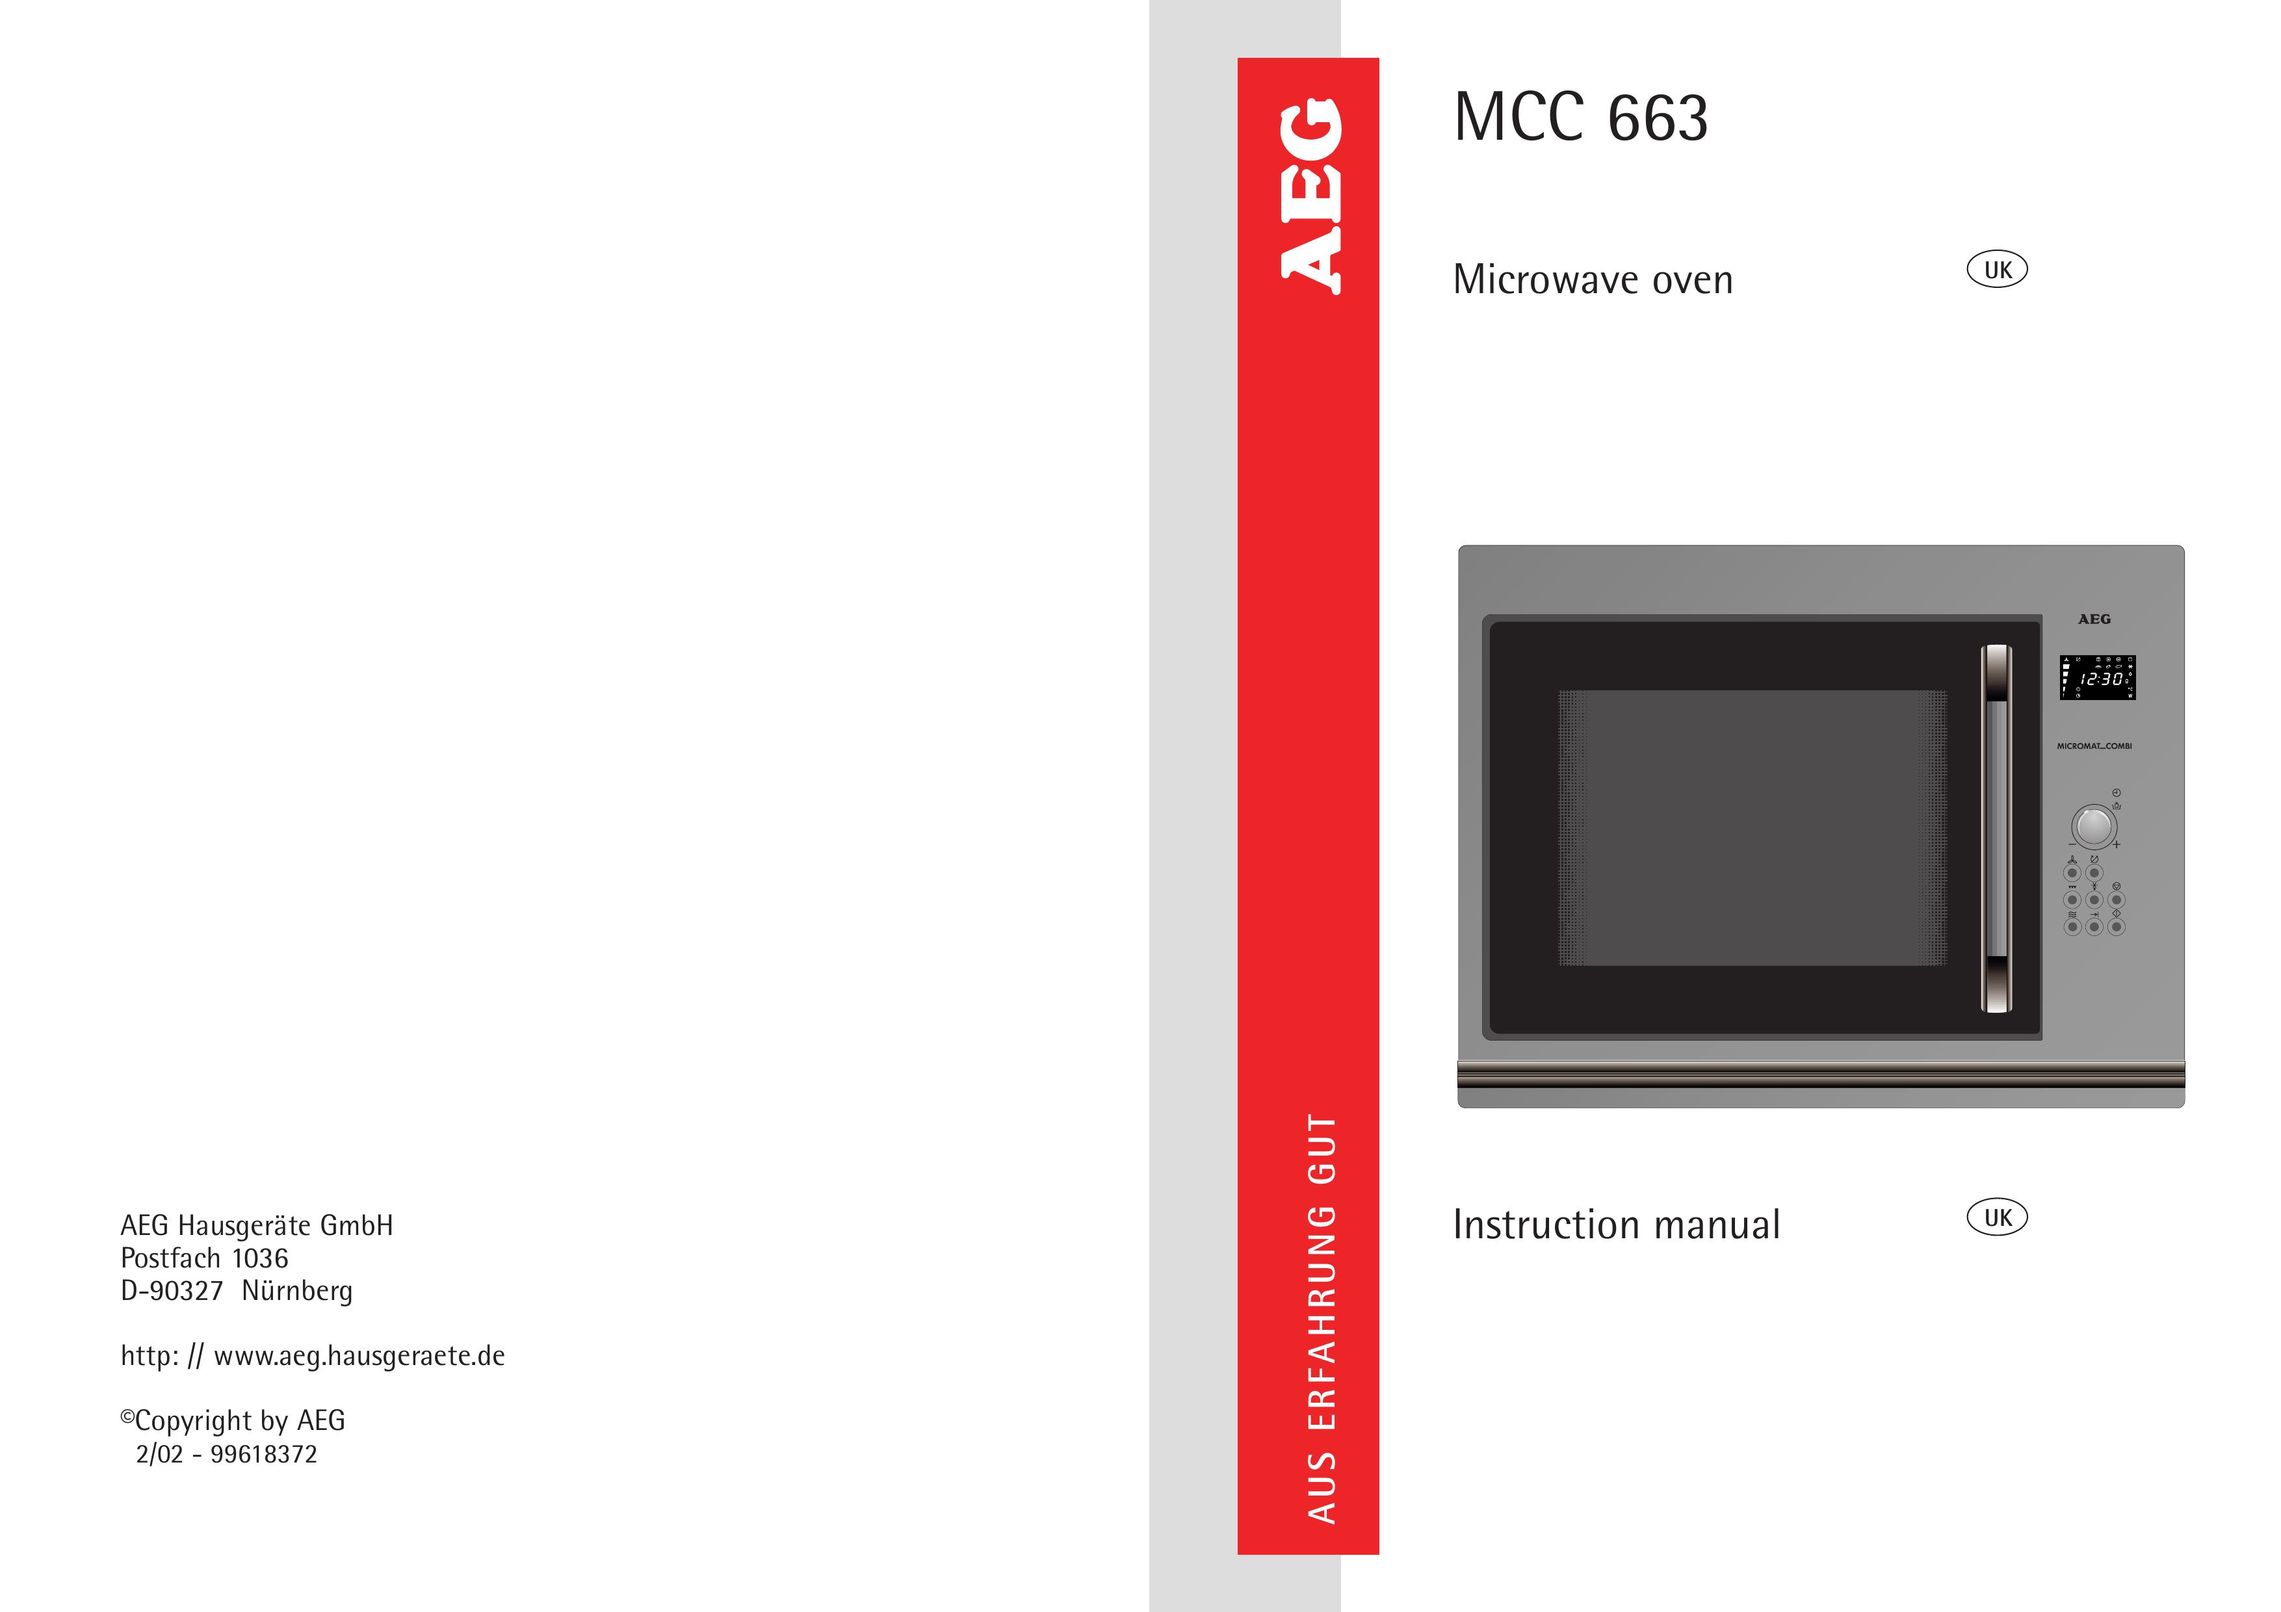 AEG MCC 663 Microwave Oven User Manual